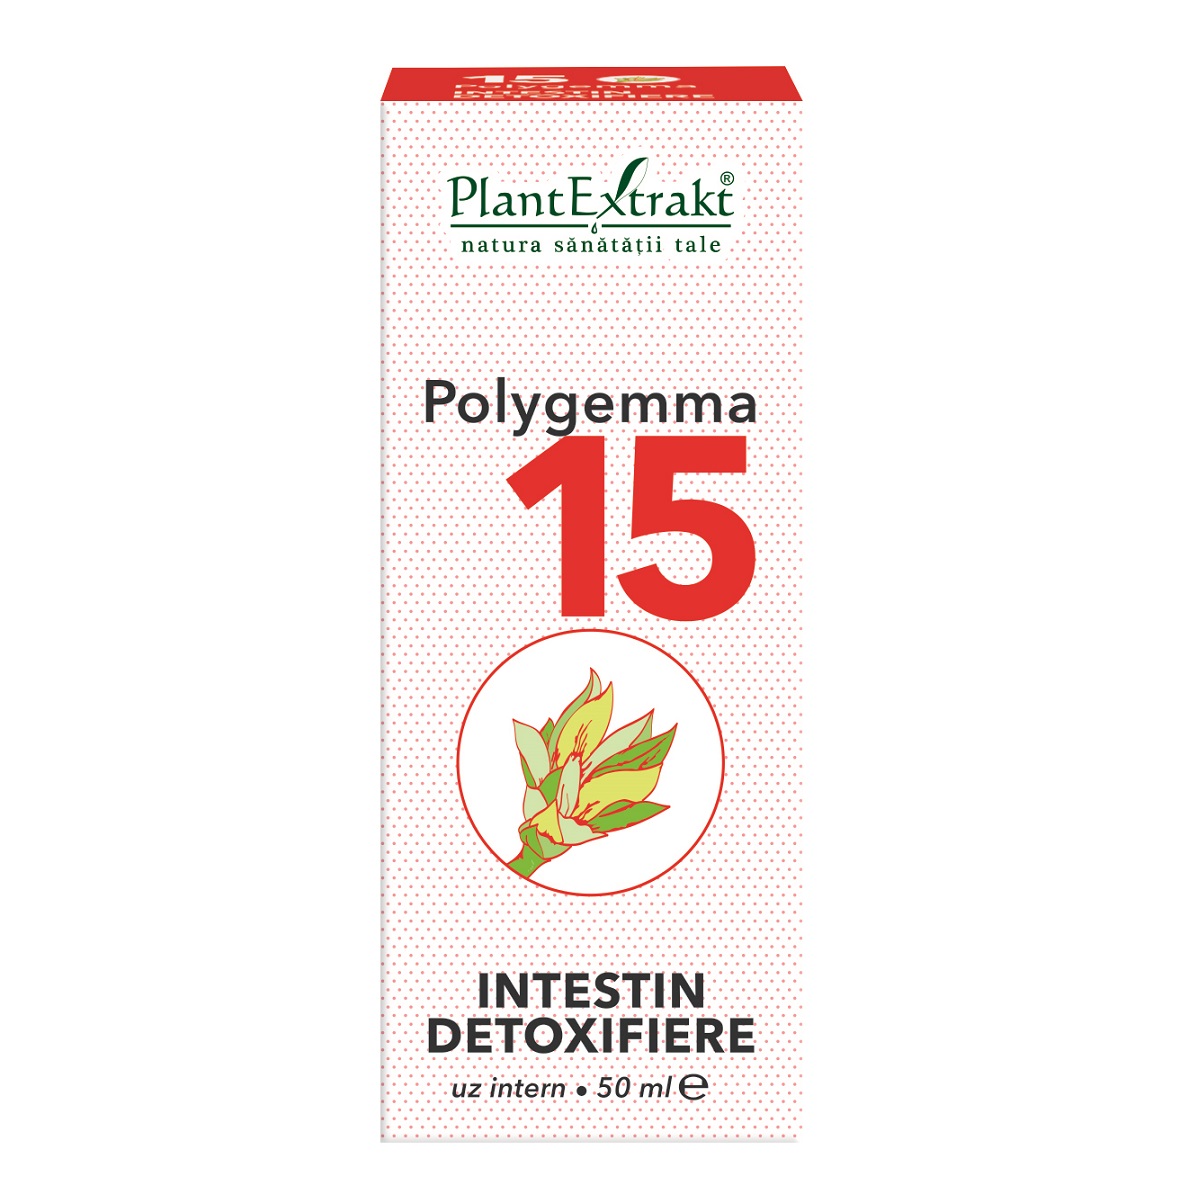 Polygemma 12, Rinichi detoxifiere, 50 ml, Plant Extrakt